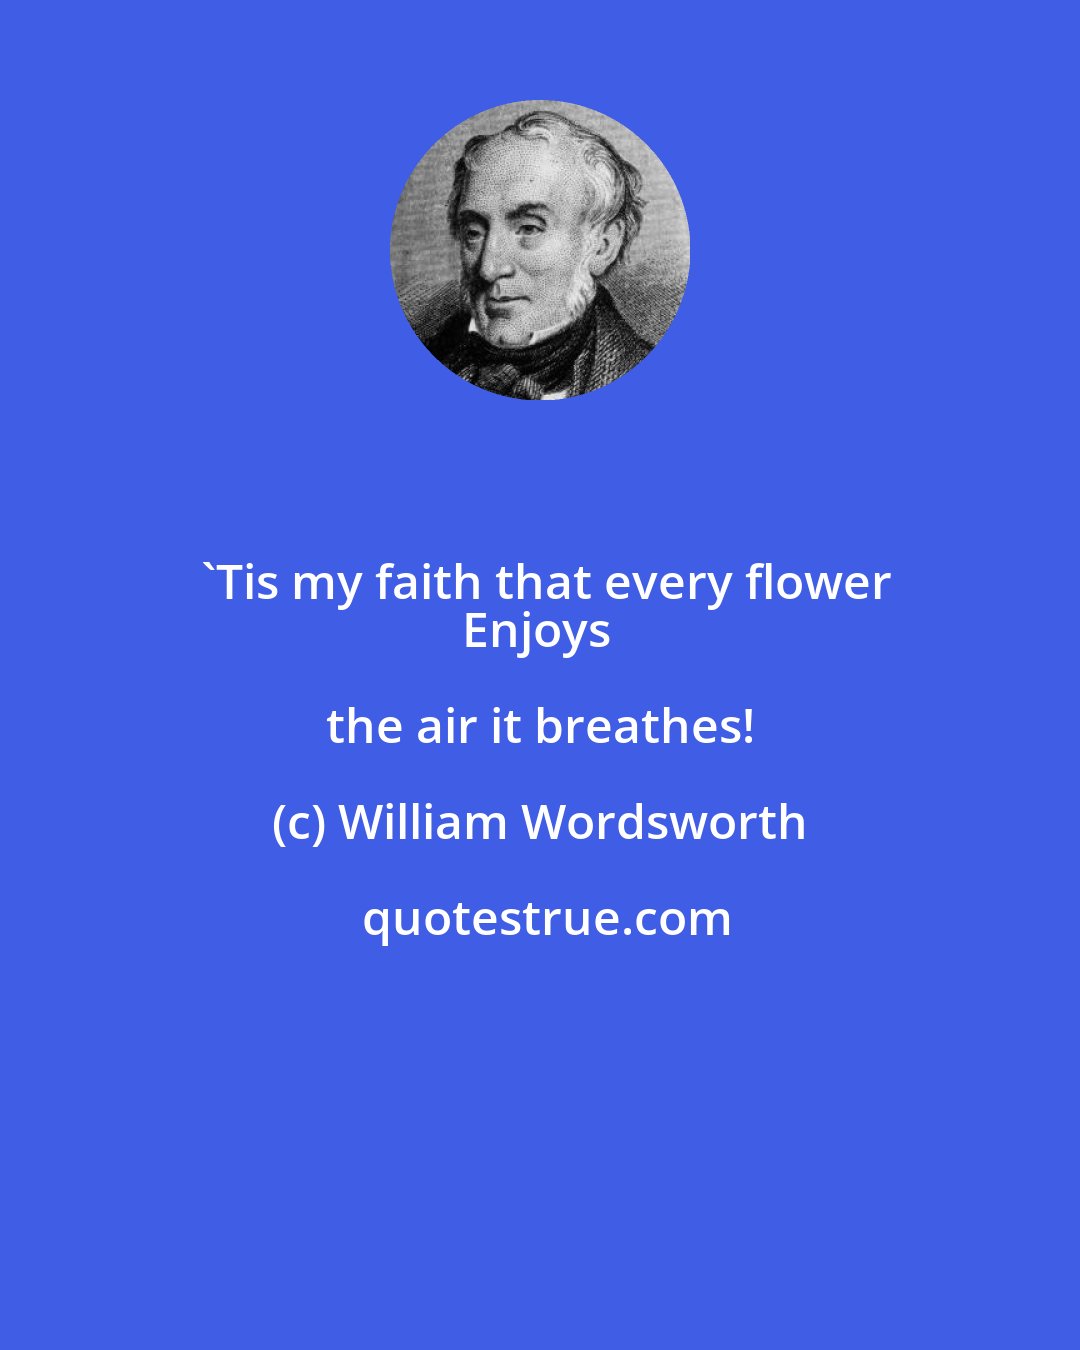 William Wordsworth: 'Tis my faith that every flower
Enjoys the air it breathes!